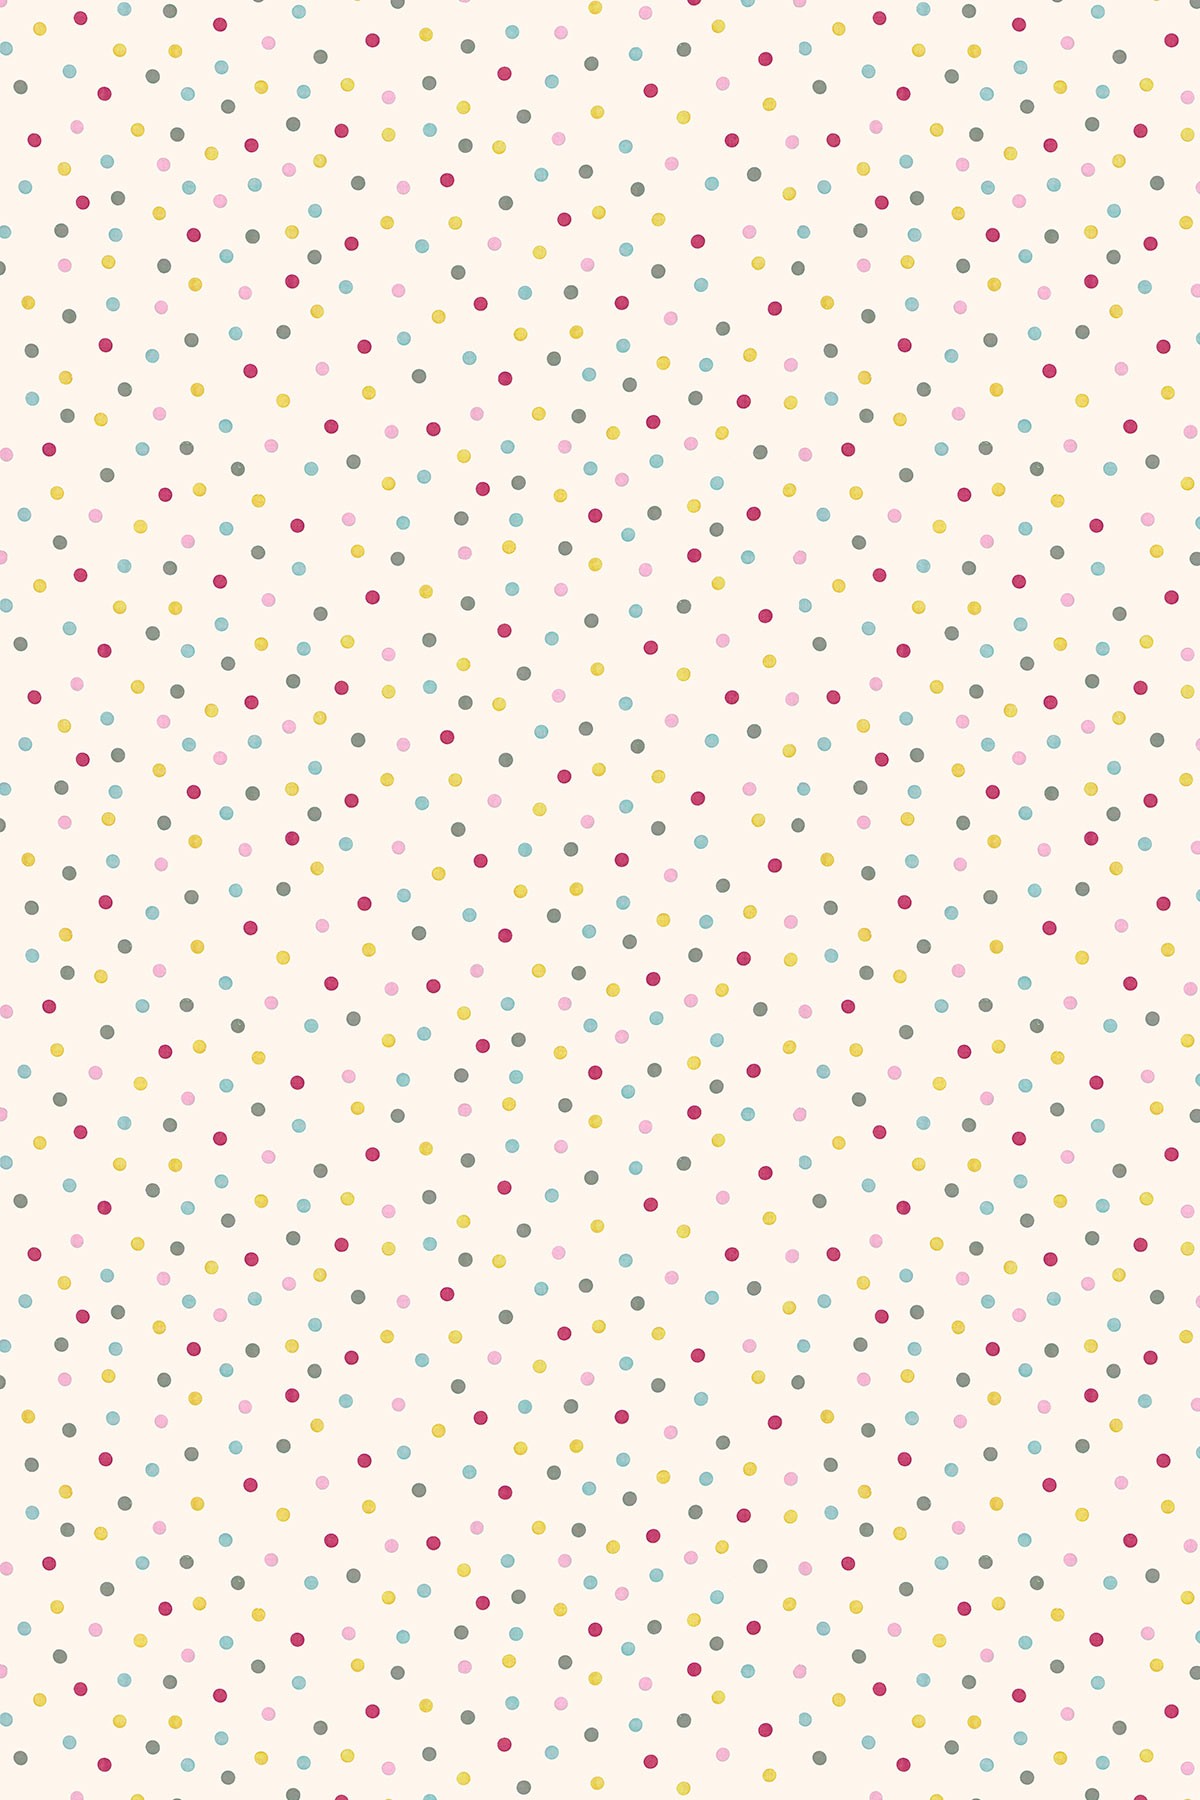 Yellow Polka Dot Wallpaper - WallpaperSafari